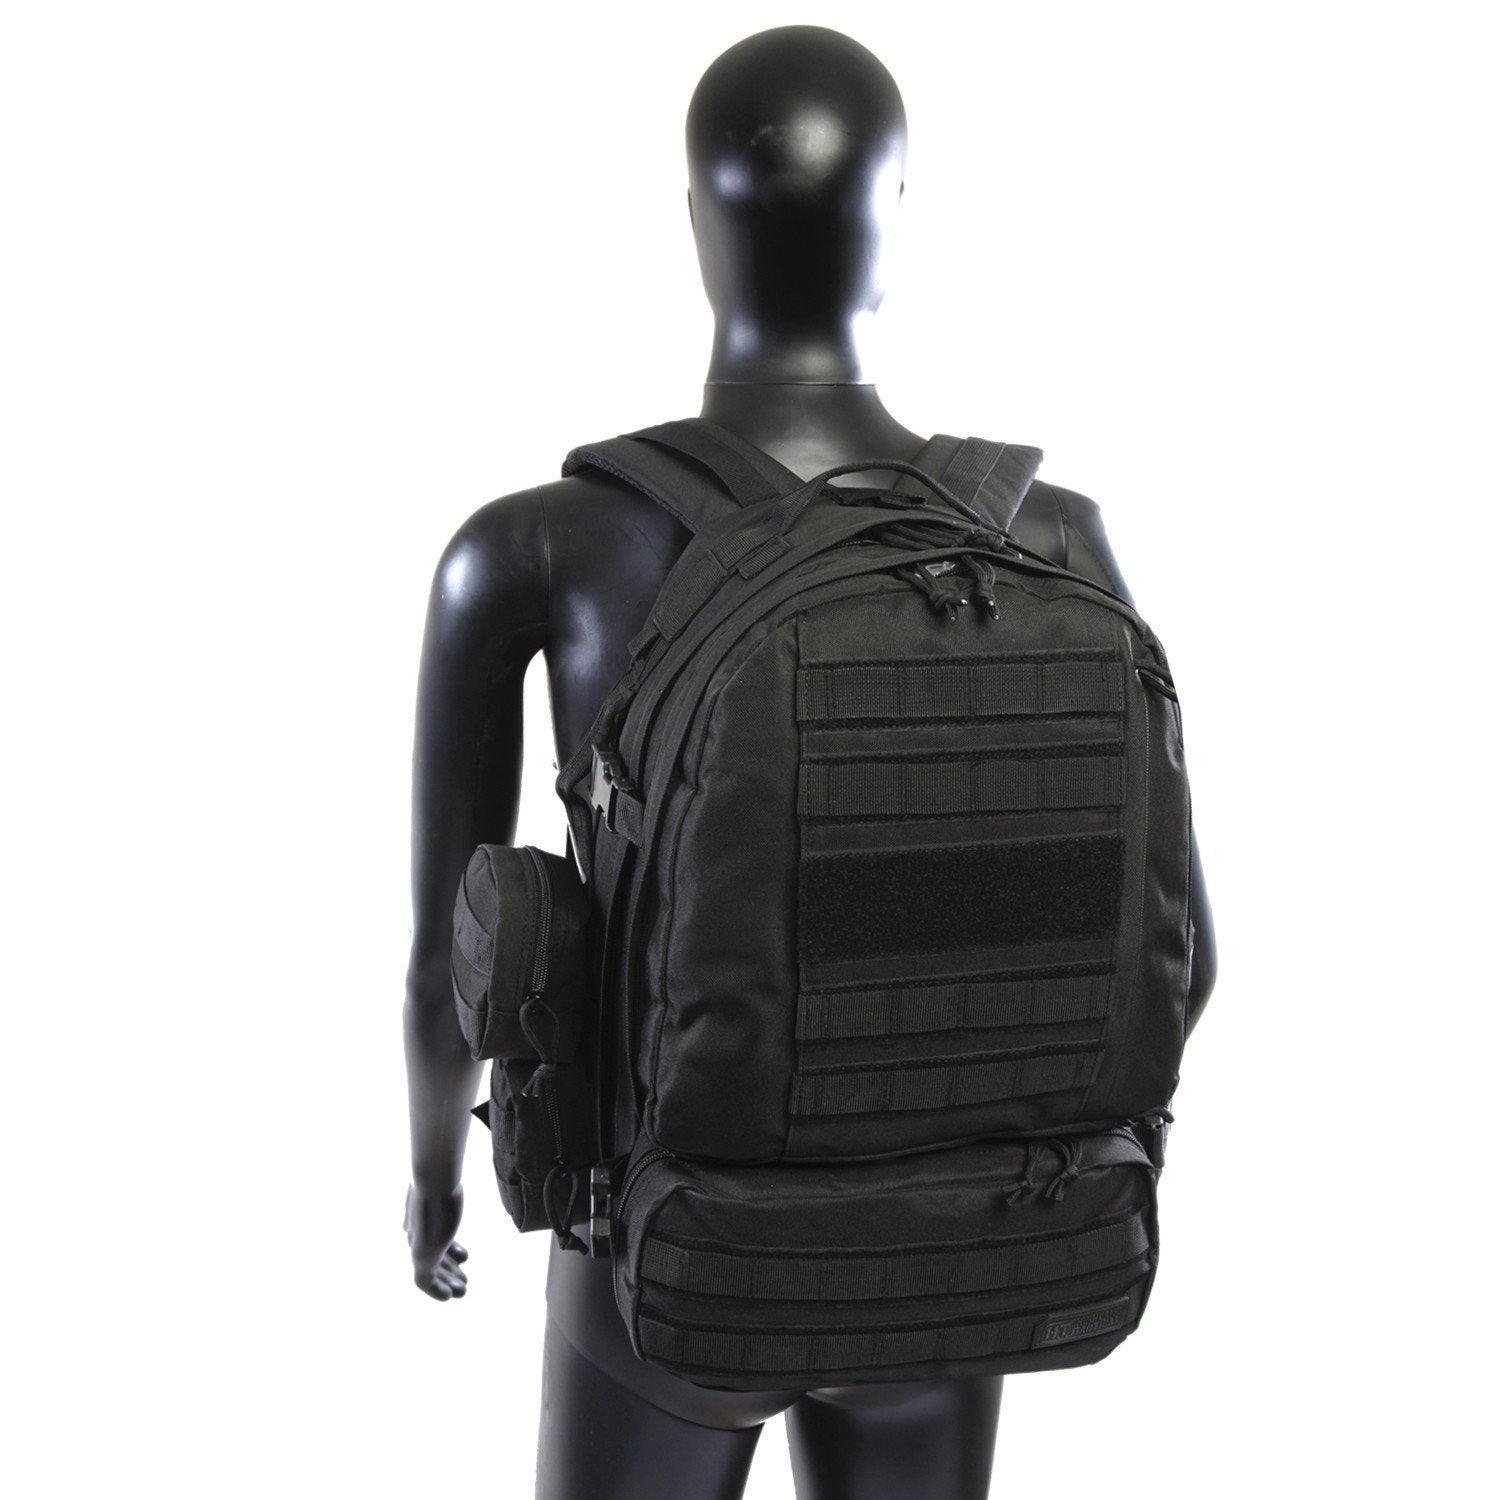 Highland Tactical Apollo Heavy Duty Tactical Backpack - Desert